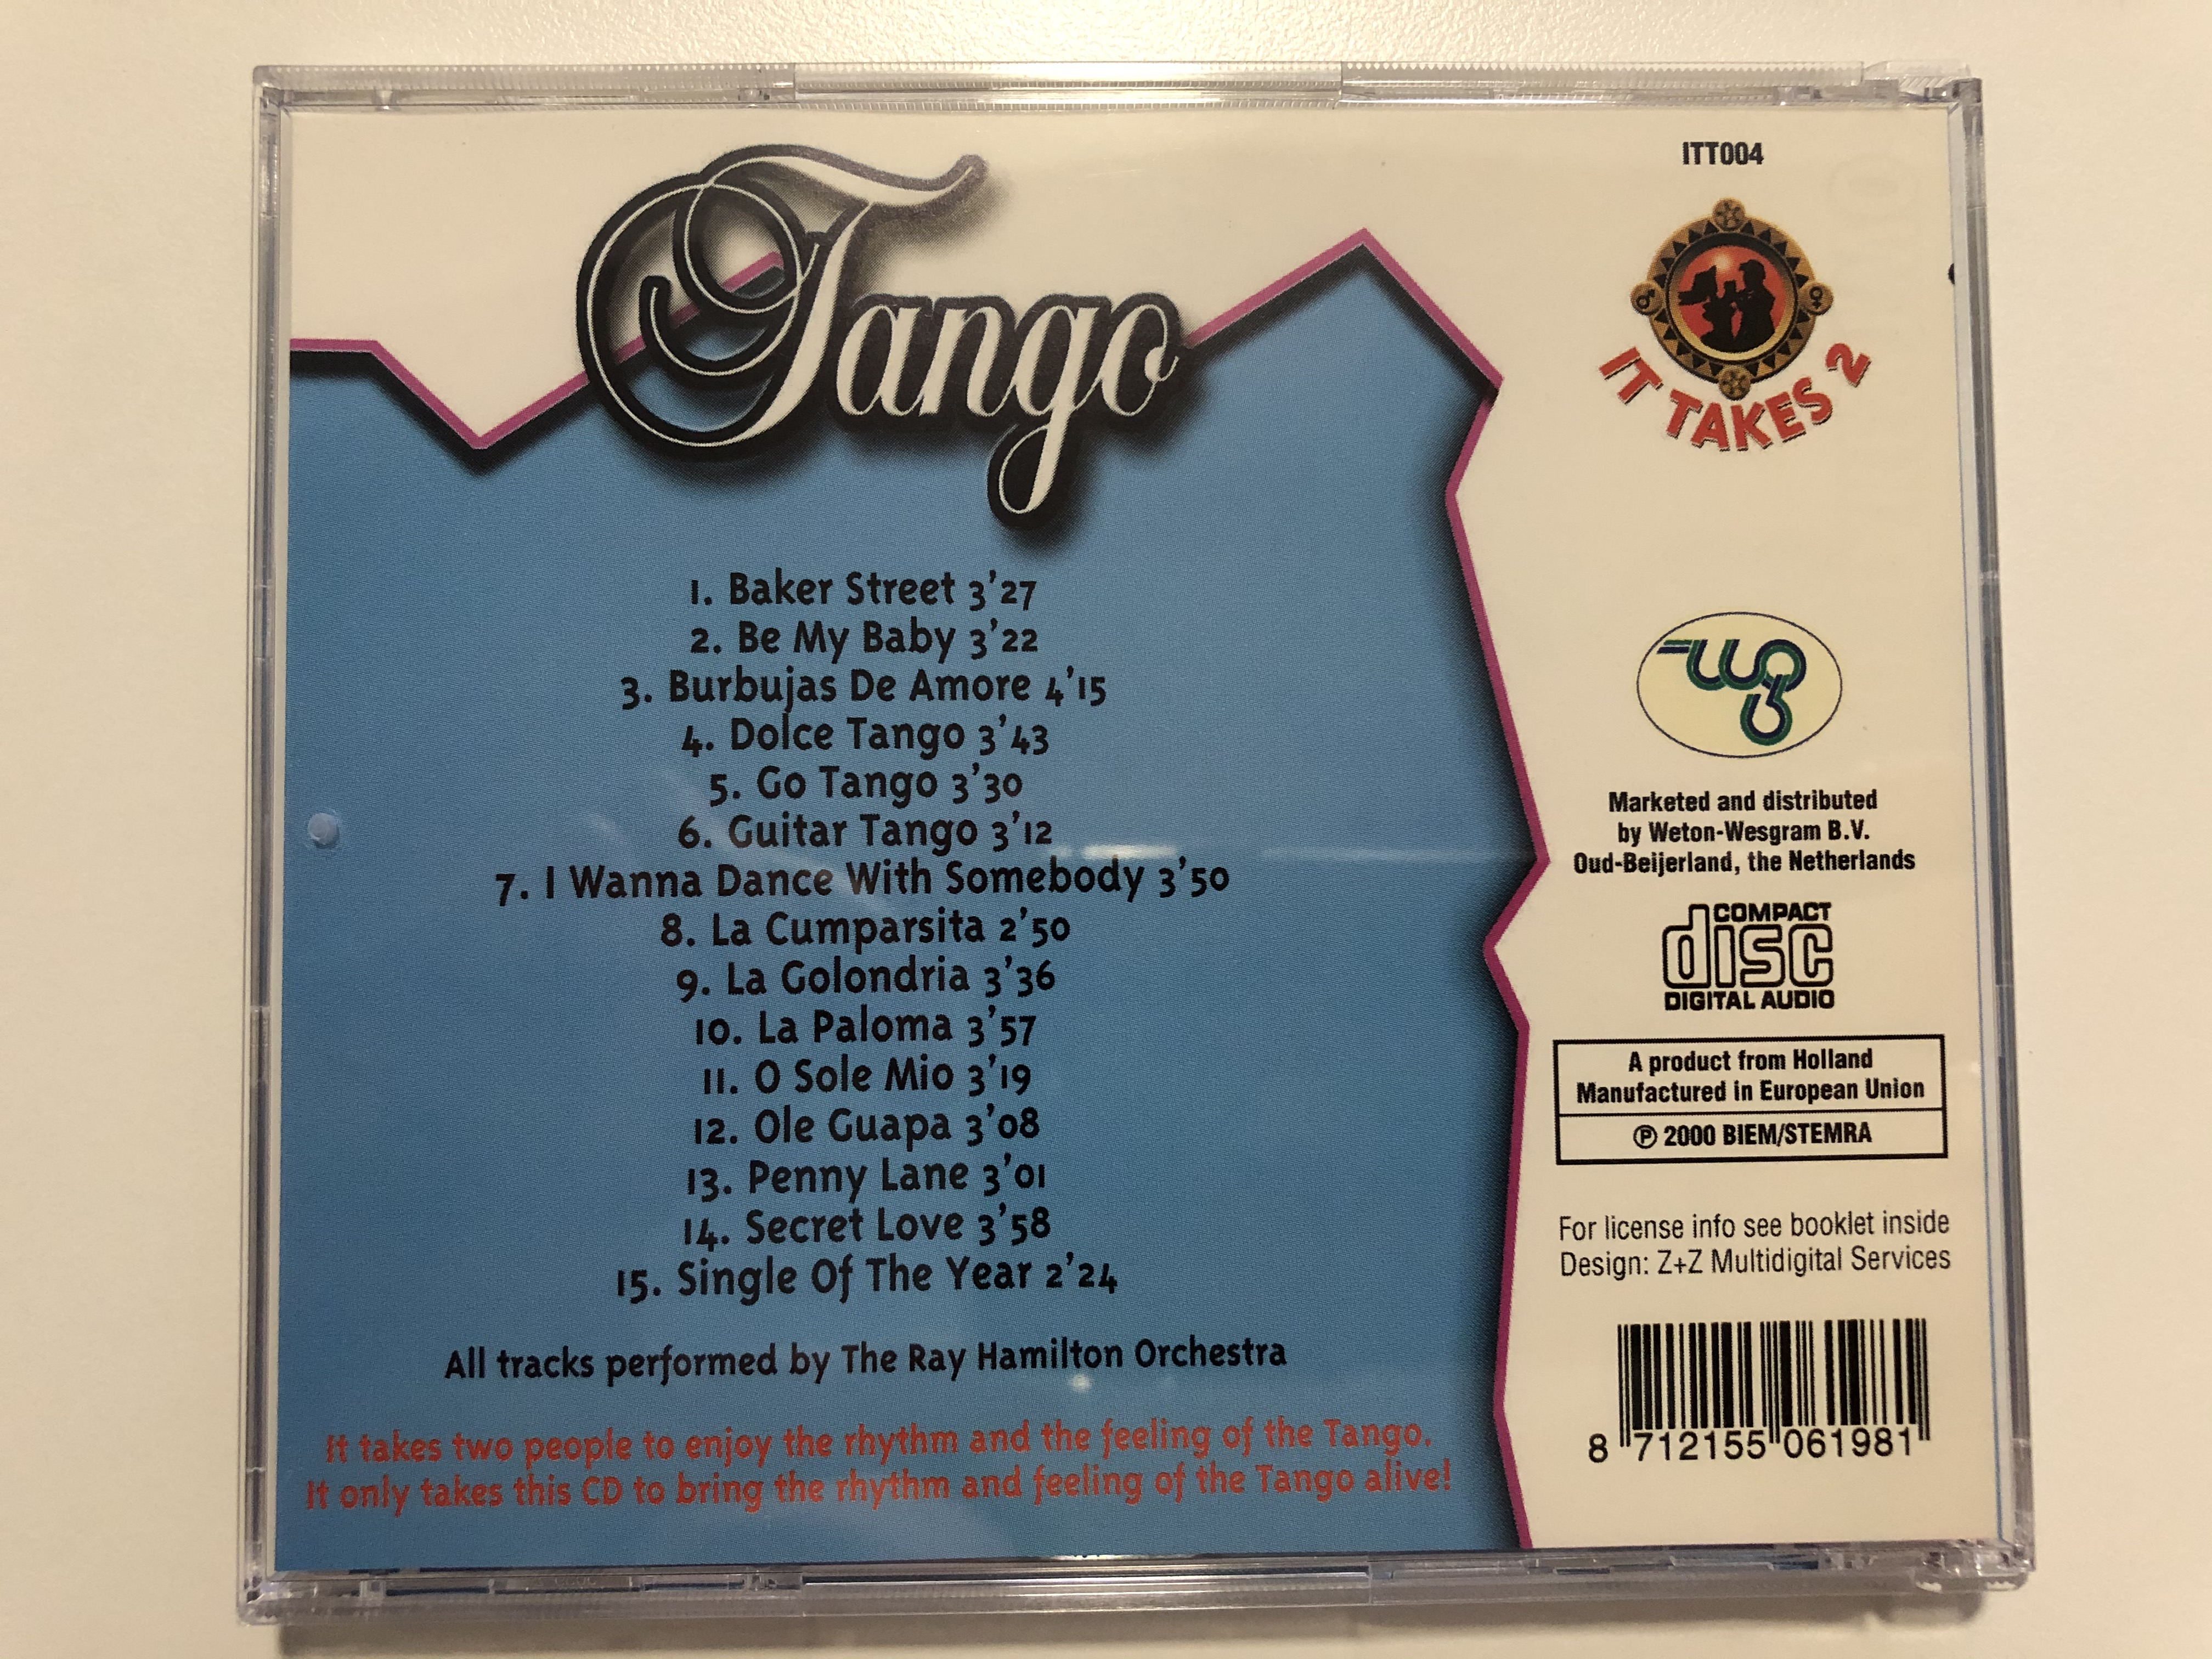 tango-la-cumparsita-la-paloma-o-sole-mio-ole-guapa-secret-love-it-takes-2-audio-cd-2000-itt004-2-.jpg